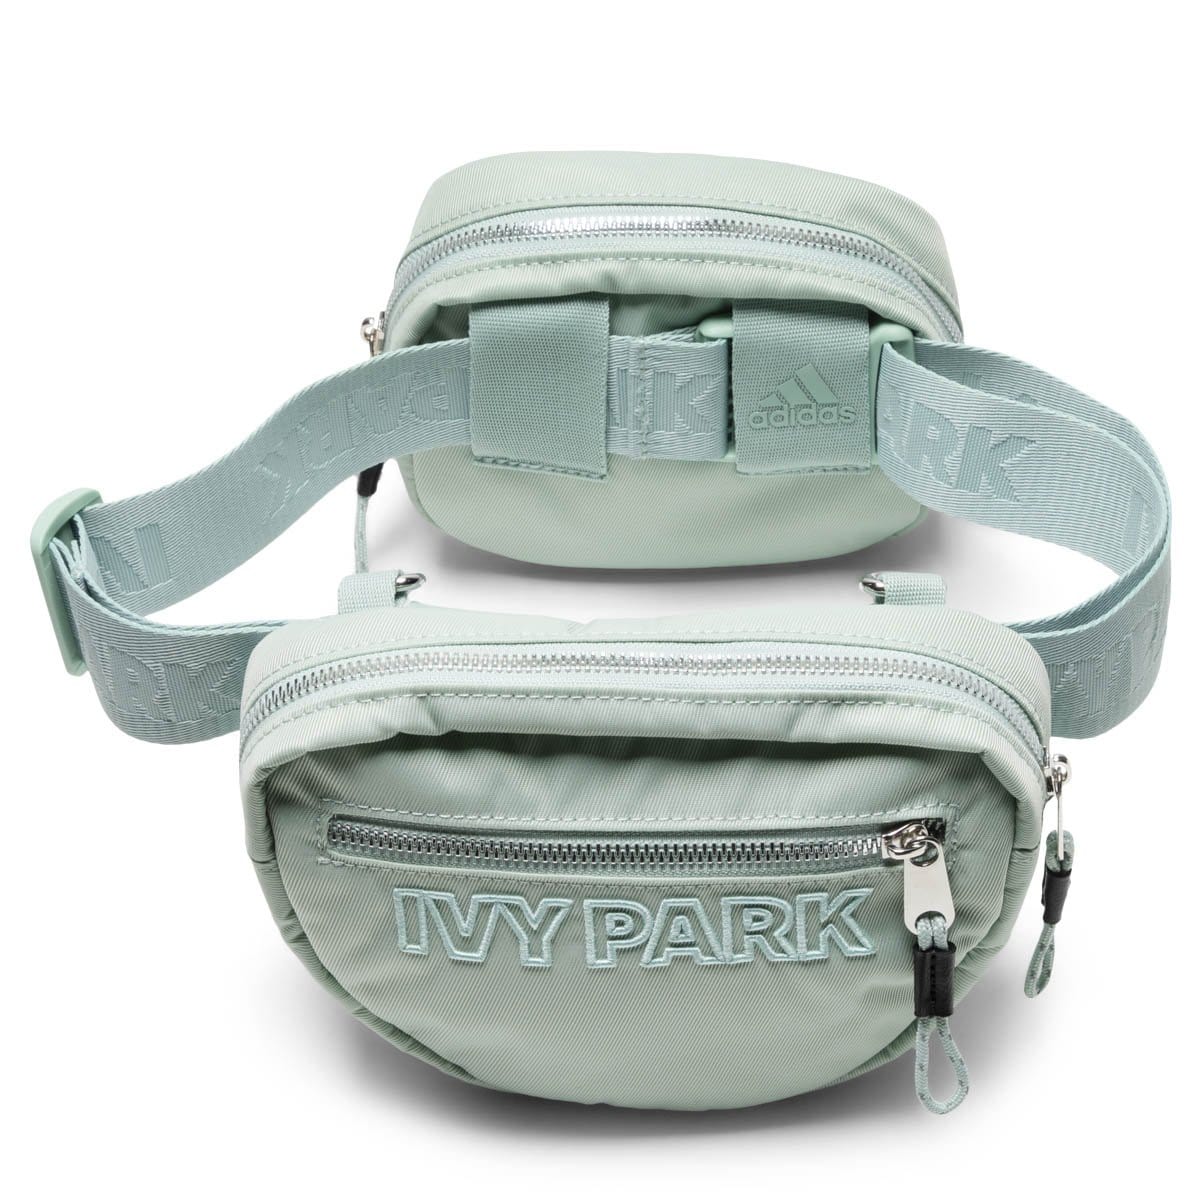 ivy park accessories